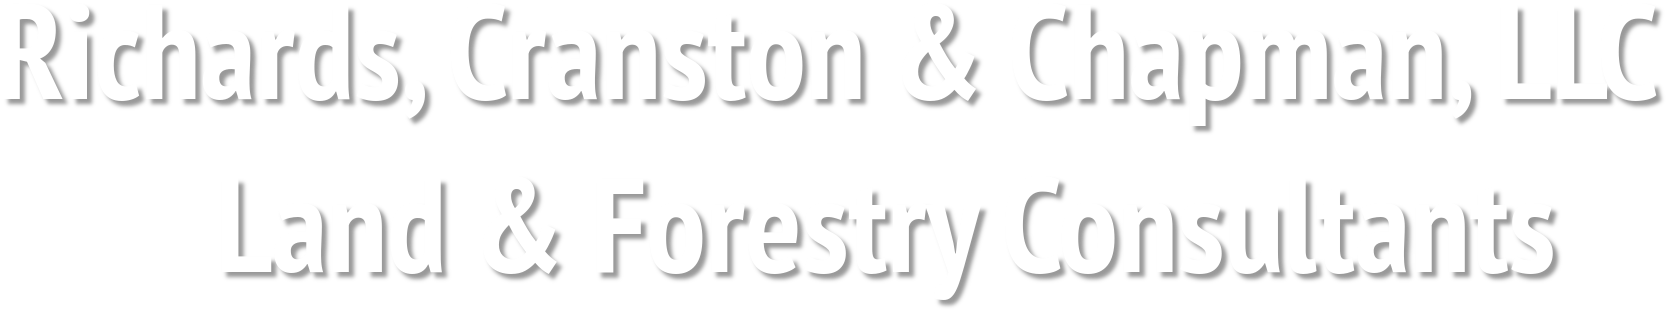 Richards, Cranston & Chapman, LLC – Land & Forestry Consultants